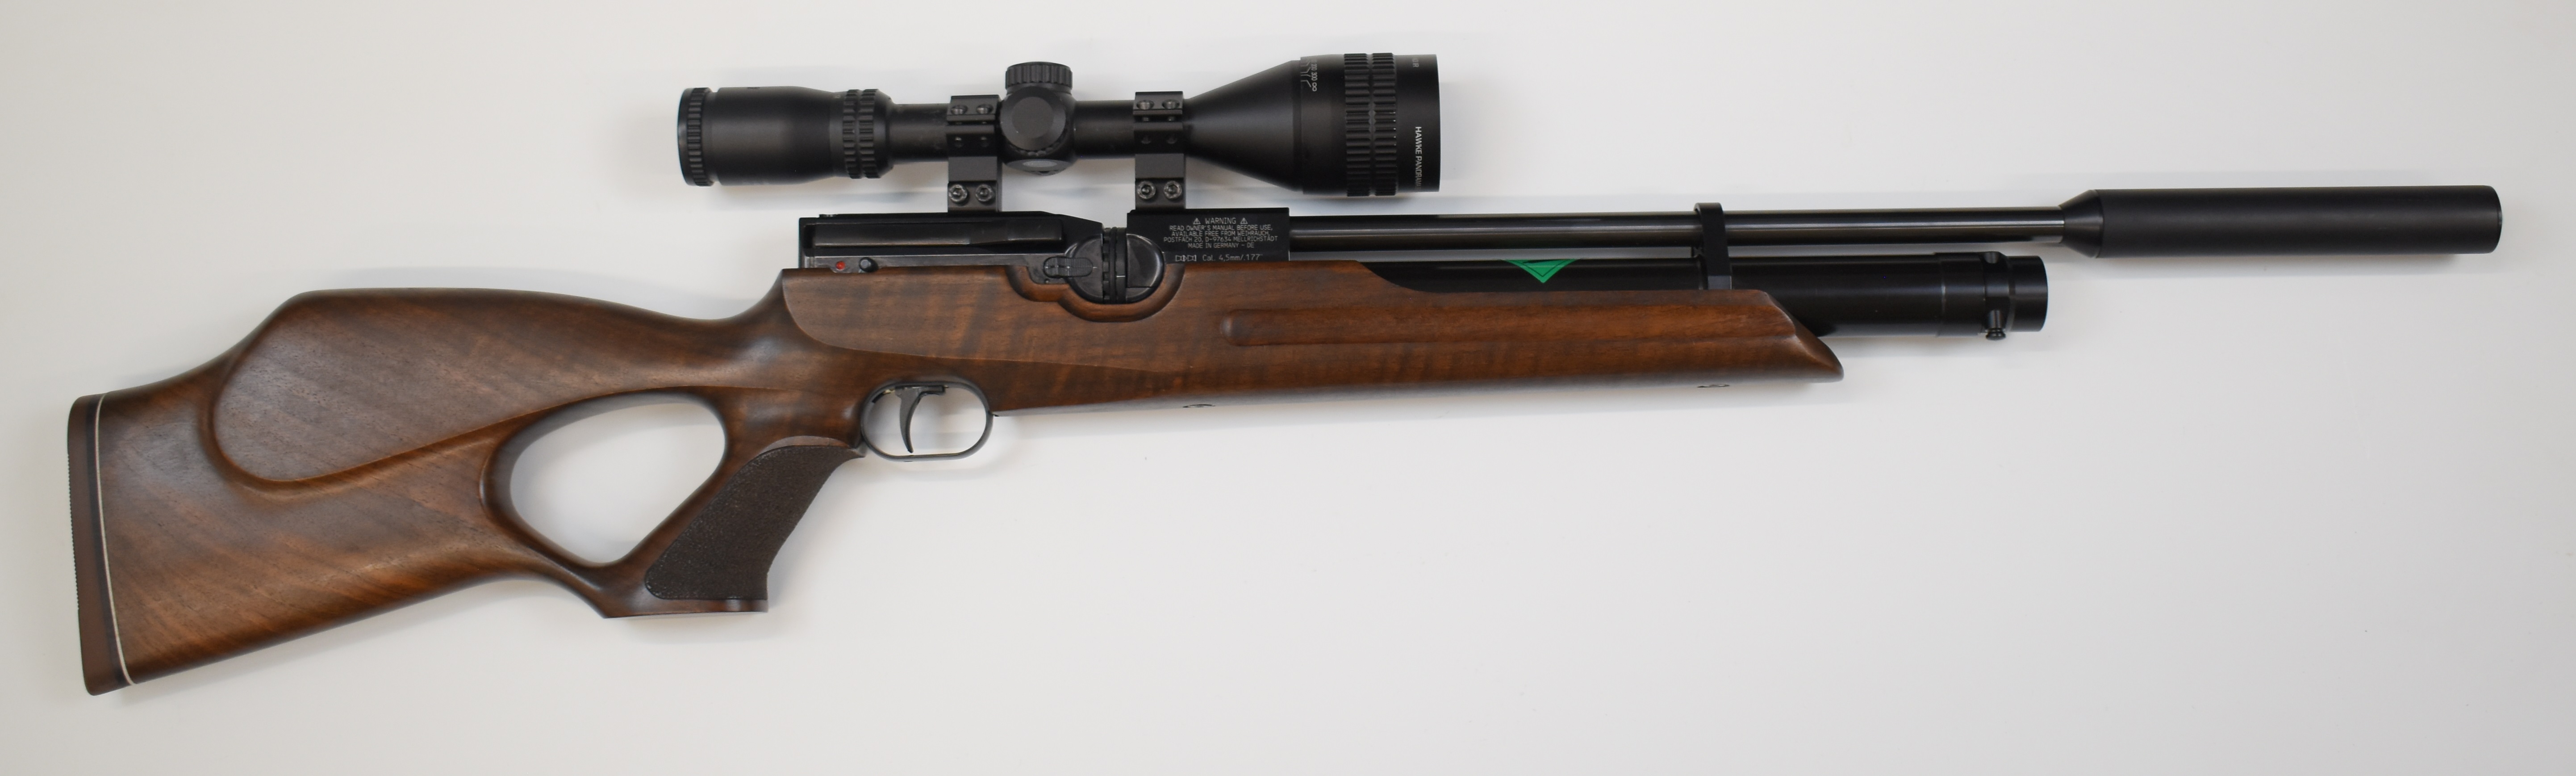 Weihrauch HW100 .177 PCP air rifle with textured semi-pistol grip, raised cheek piece, adjustable - Image 2 of 10